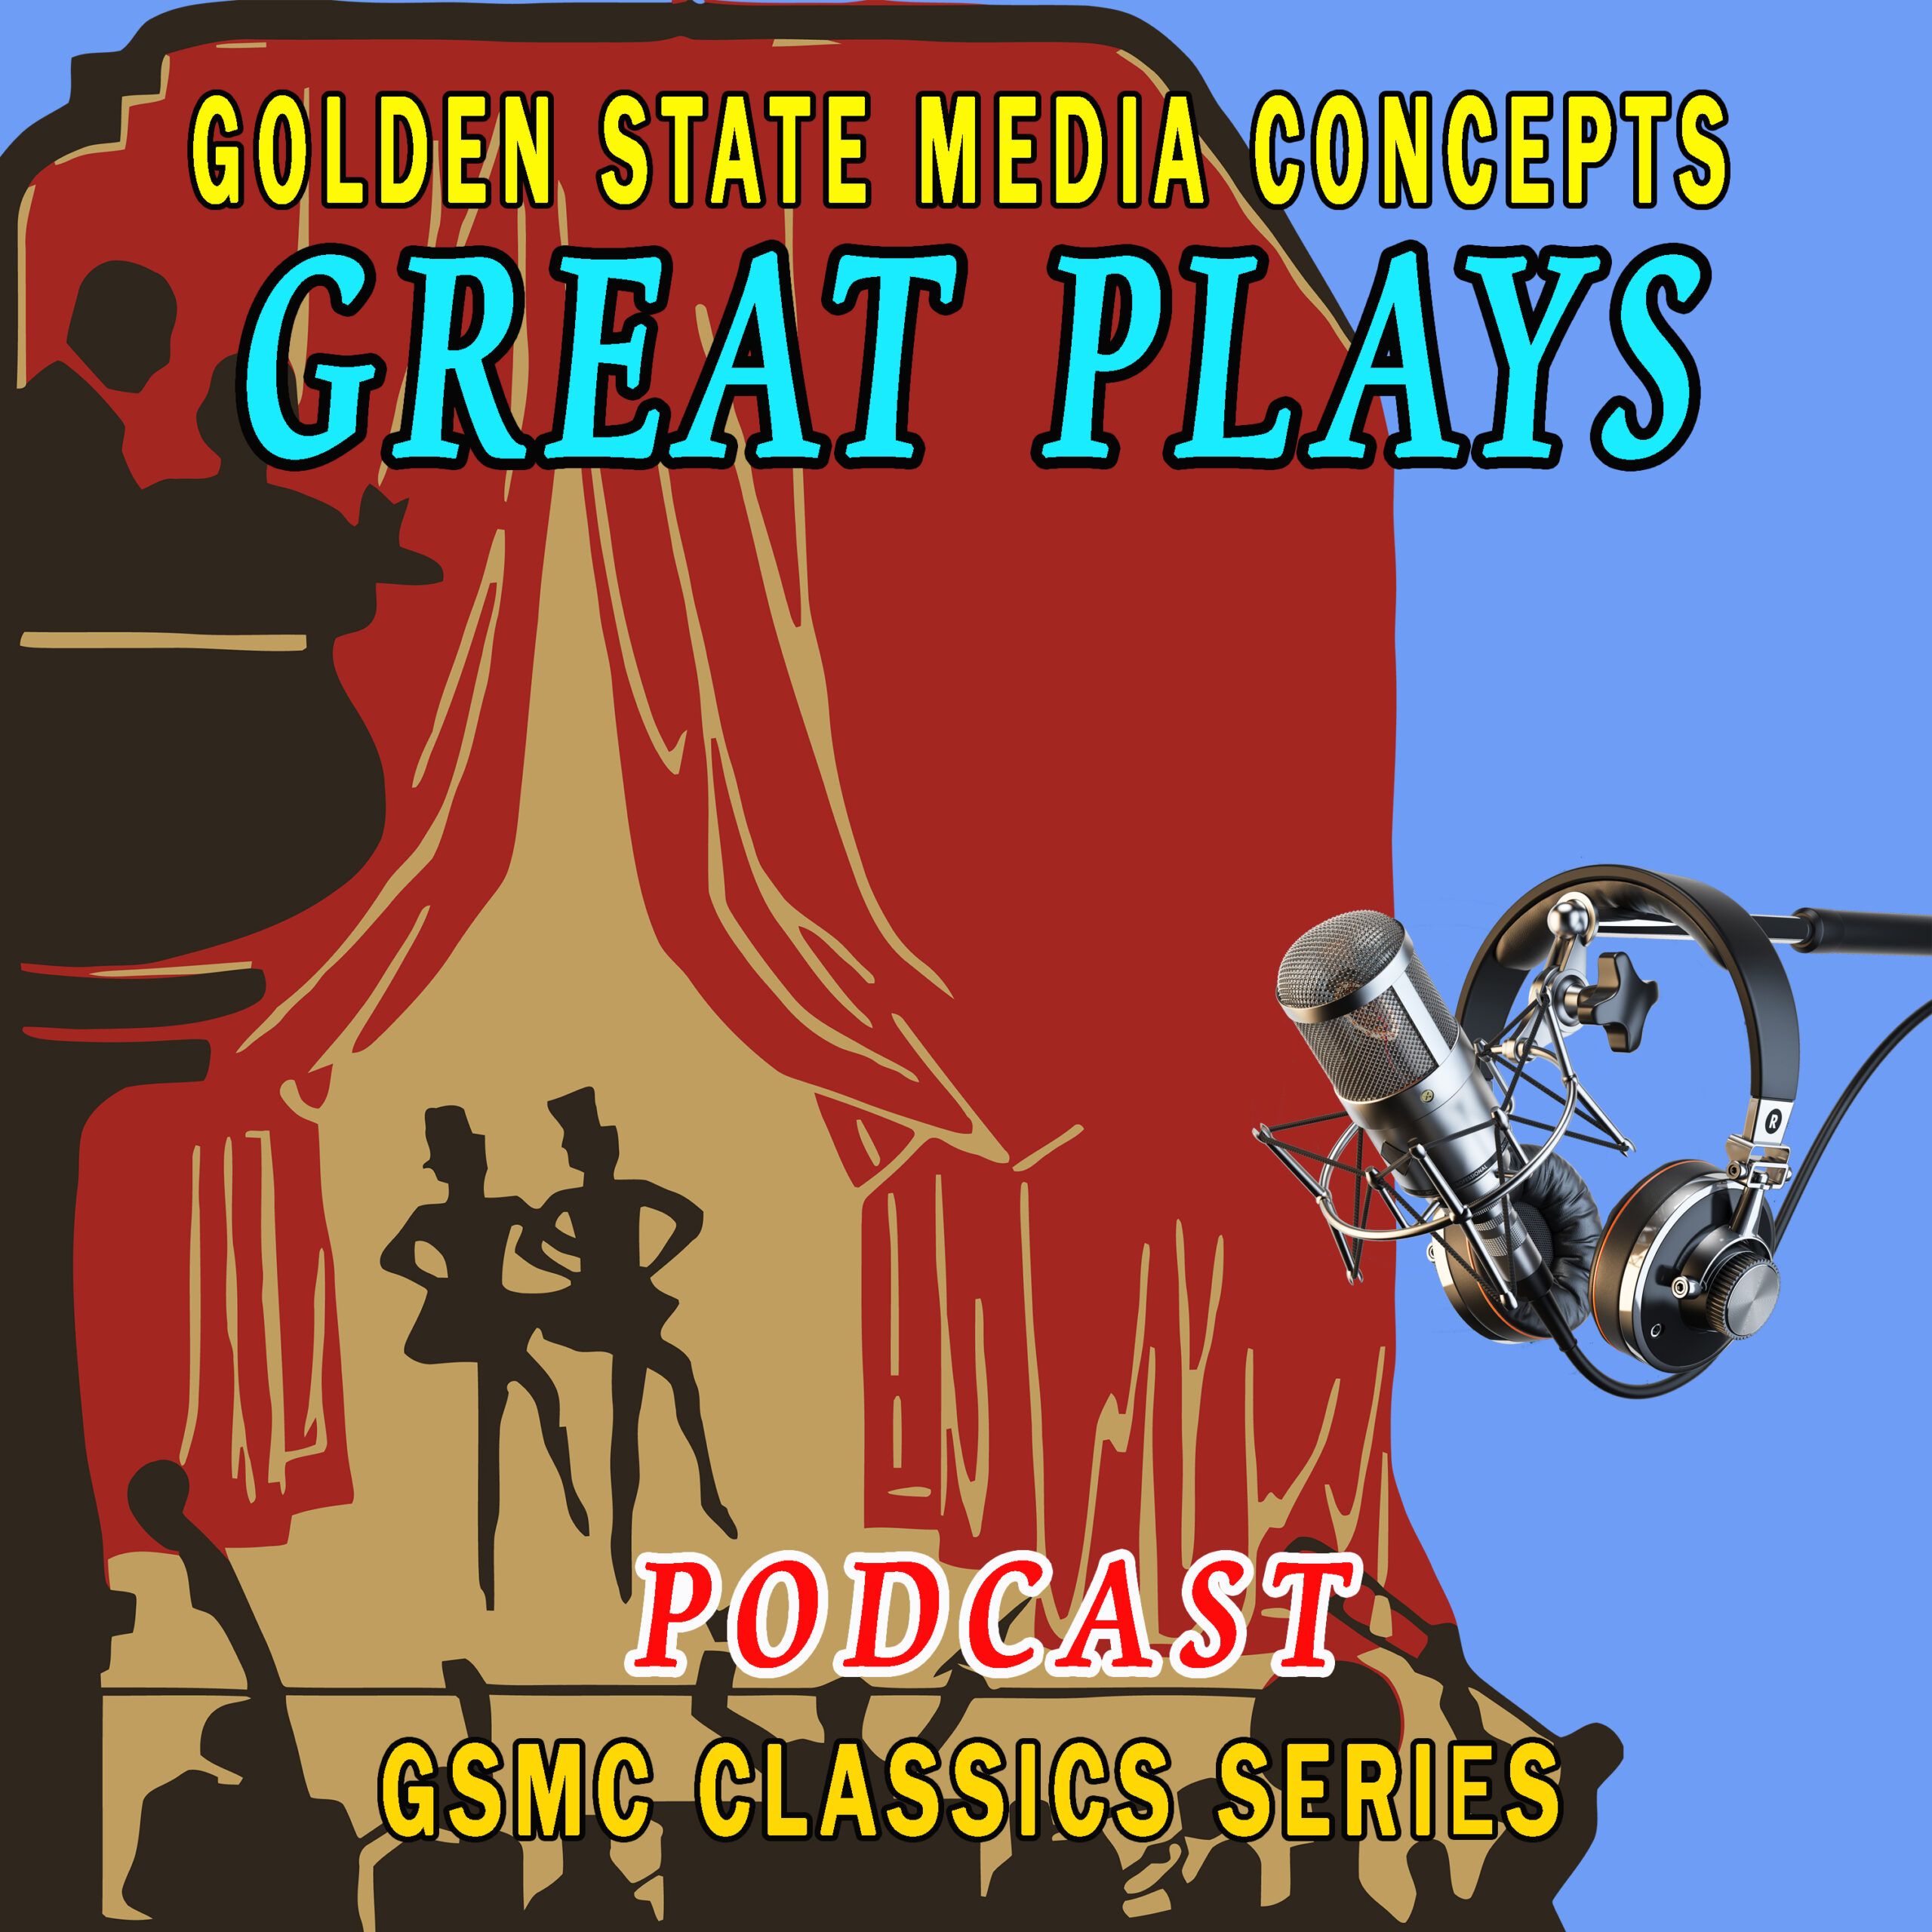 GSMC Classics: Great Plays